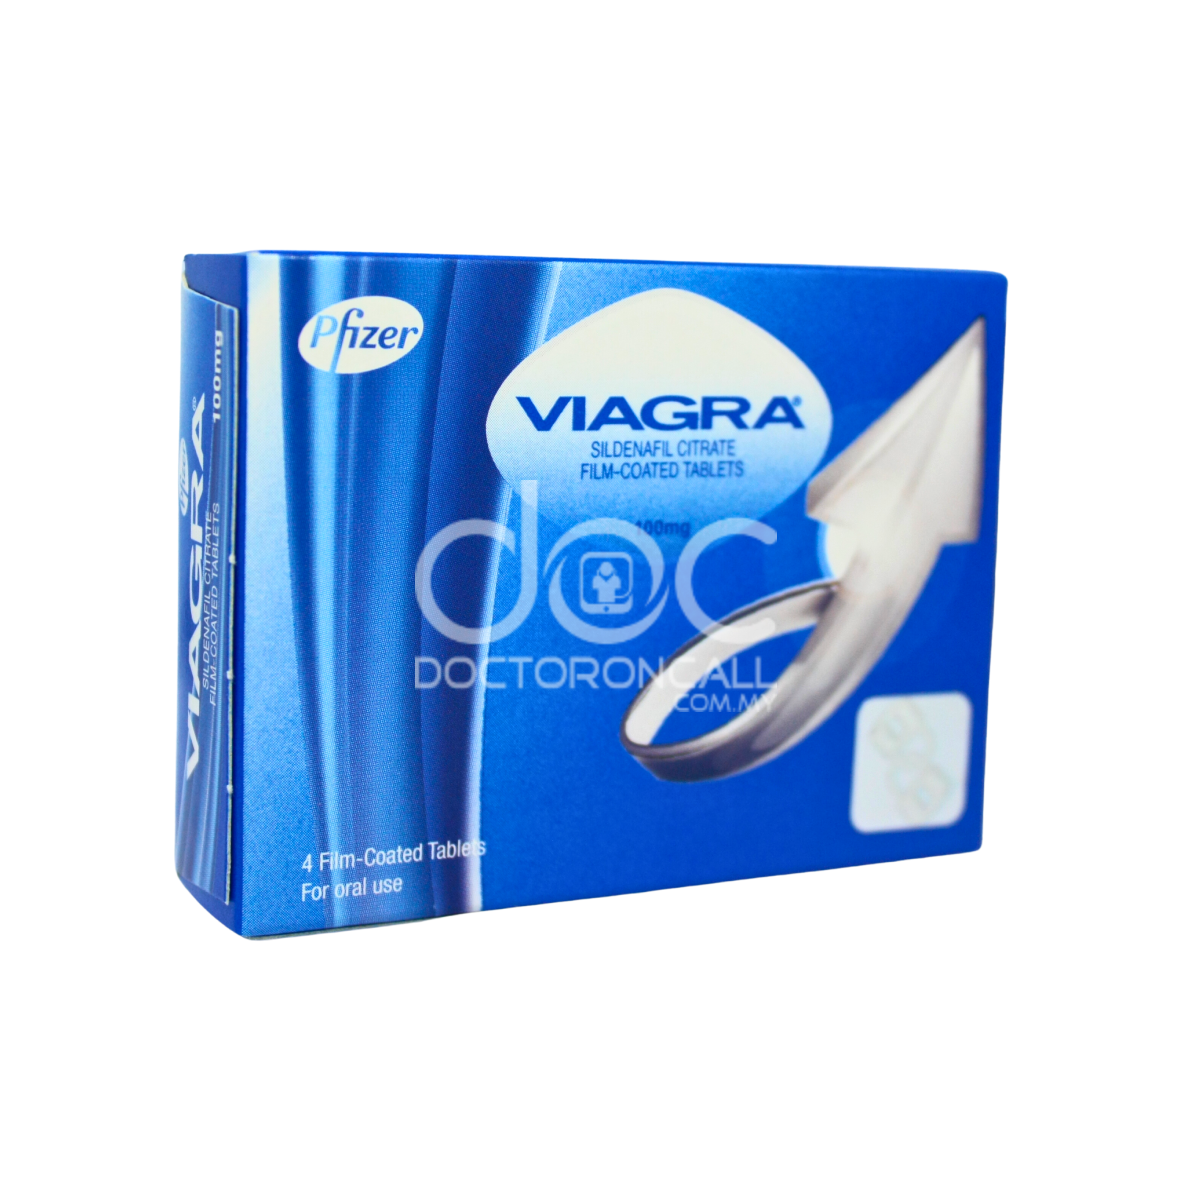 Viagra 100mg Tablet - 4s - DoctorOnCall Online Pharmacy